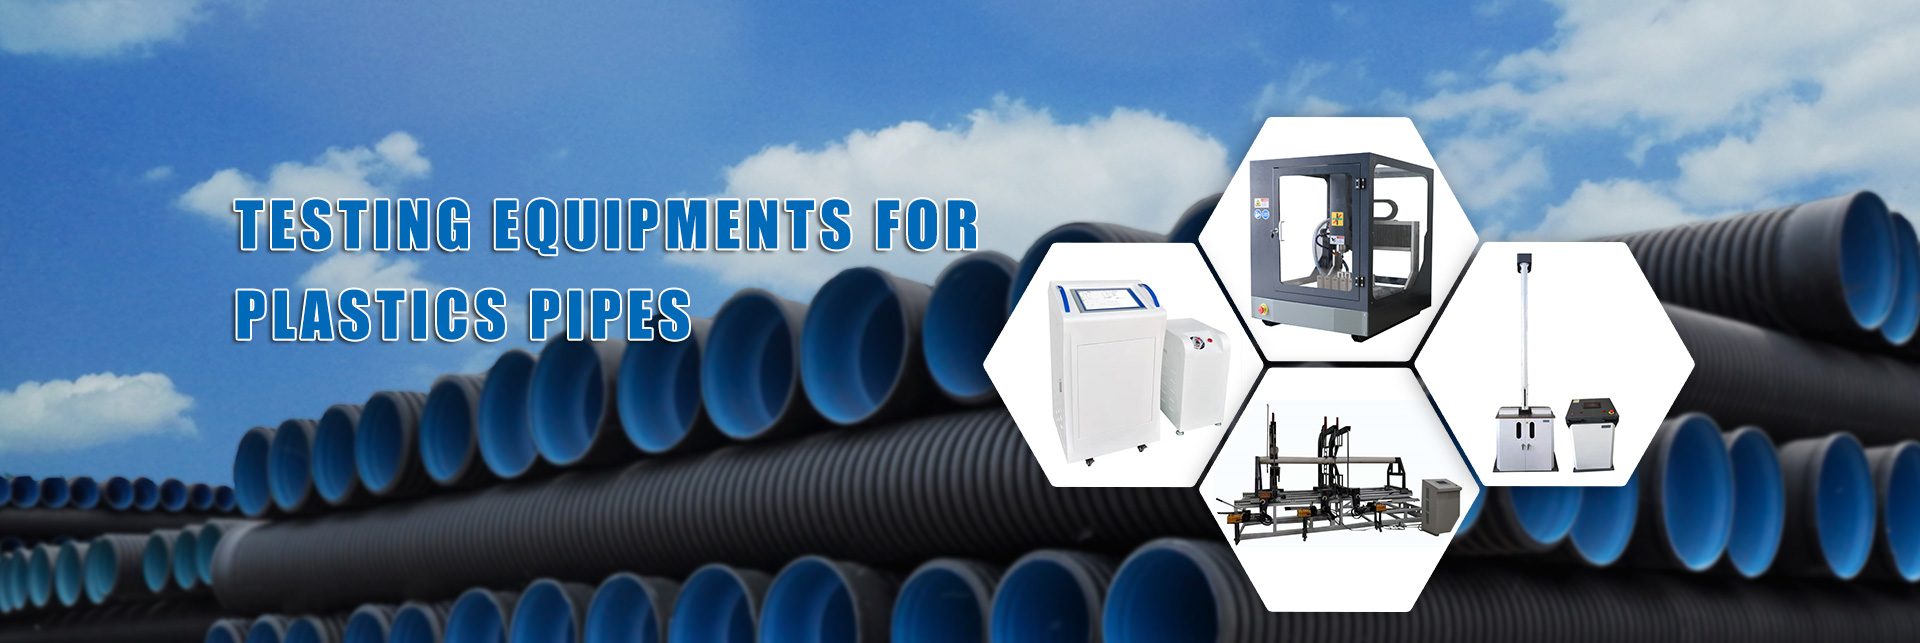 banner-plastic pipe testing equipment